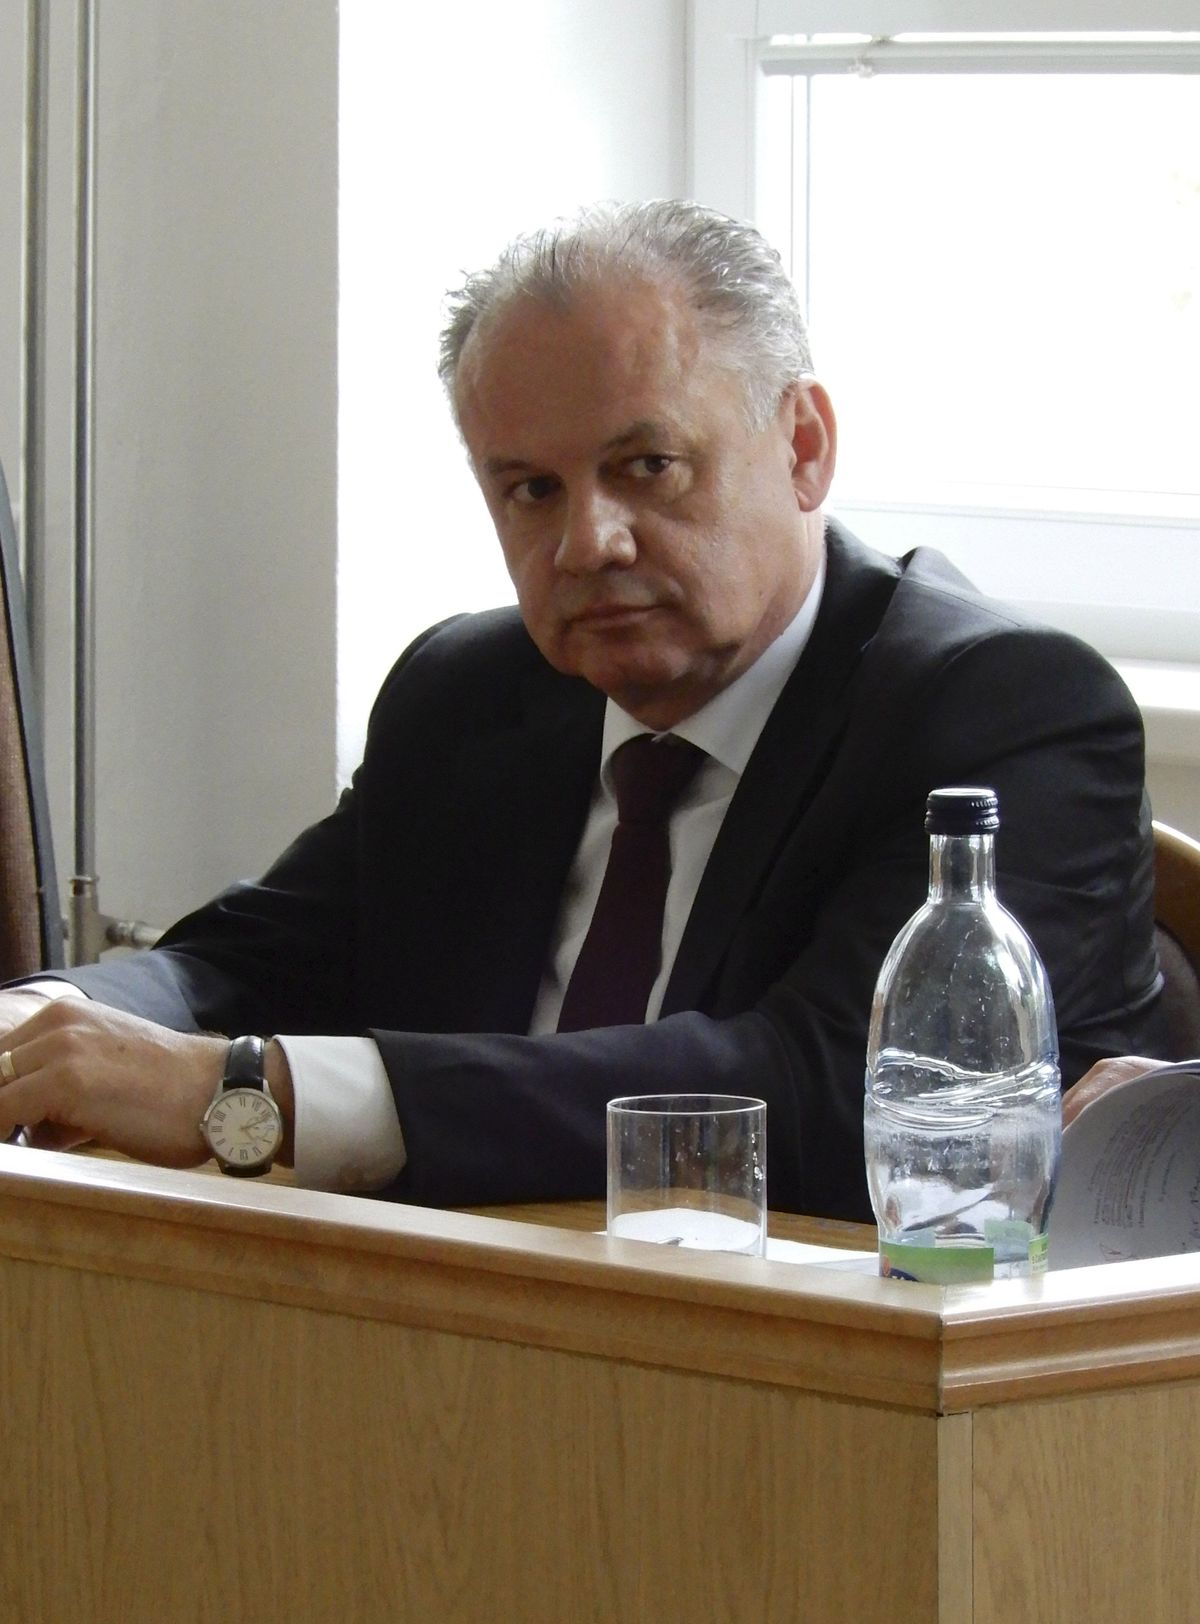 Kiska: Connections of Organised Crime with Politicians Make Slovakia Mafia State